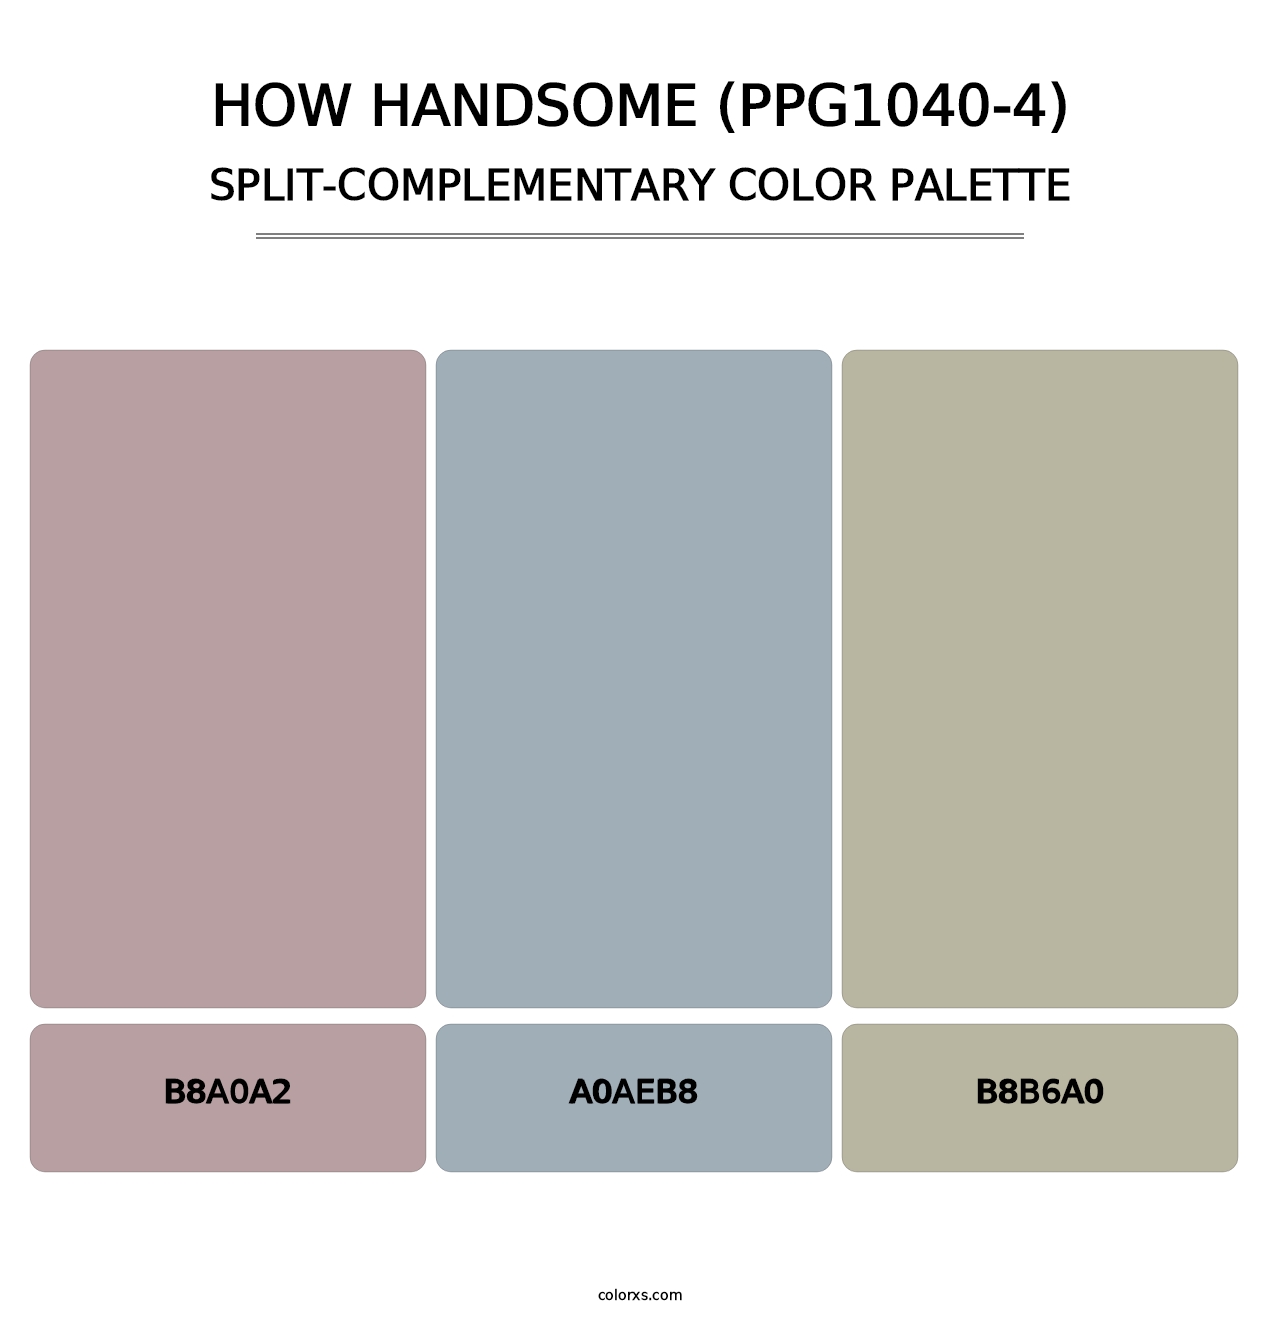 How Handsome (PPG1040-4) - Split-Complementary Color Palette